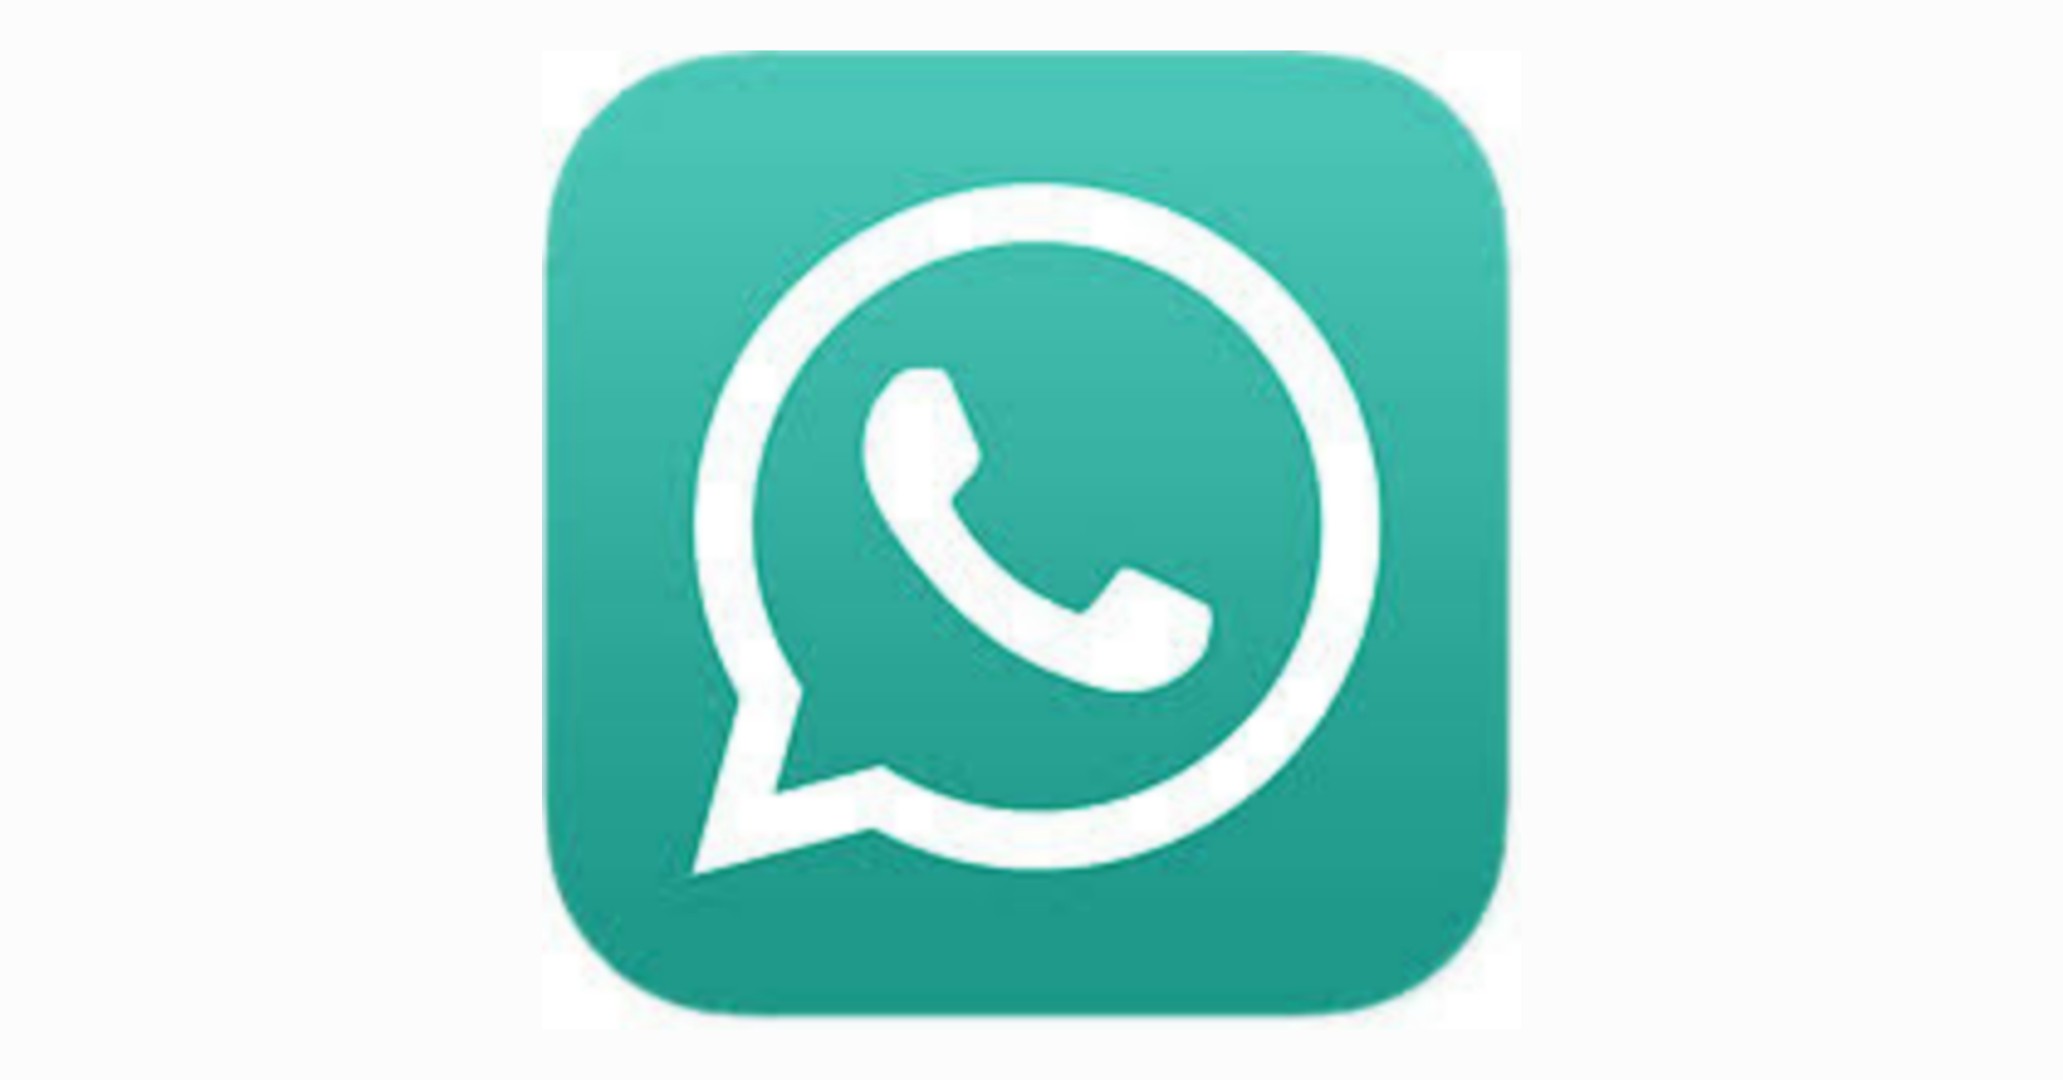 gb whatsapp themes download 2021 new version